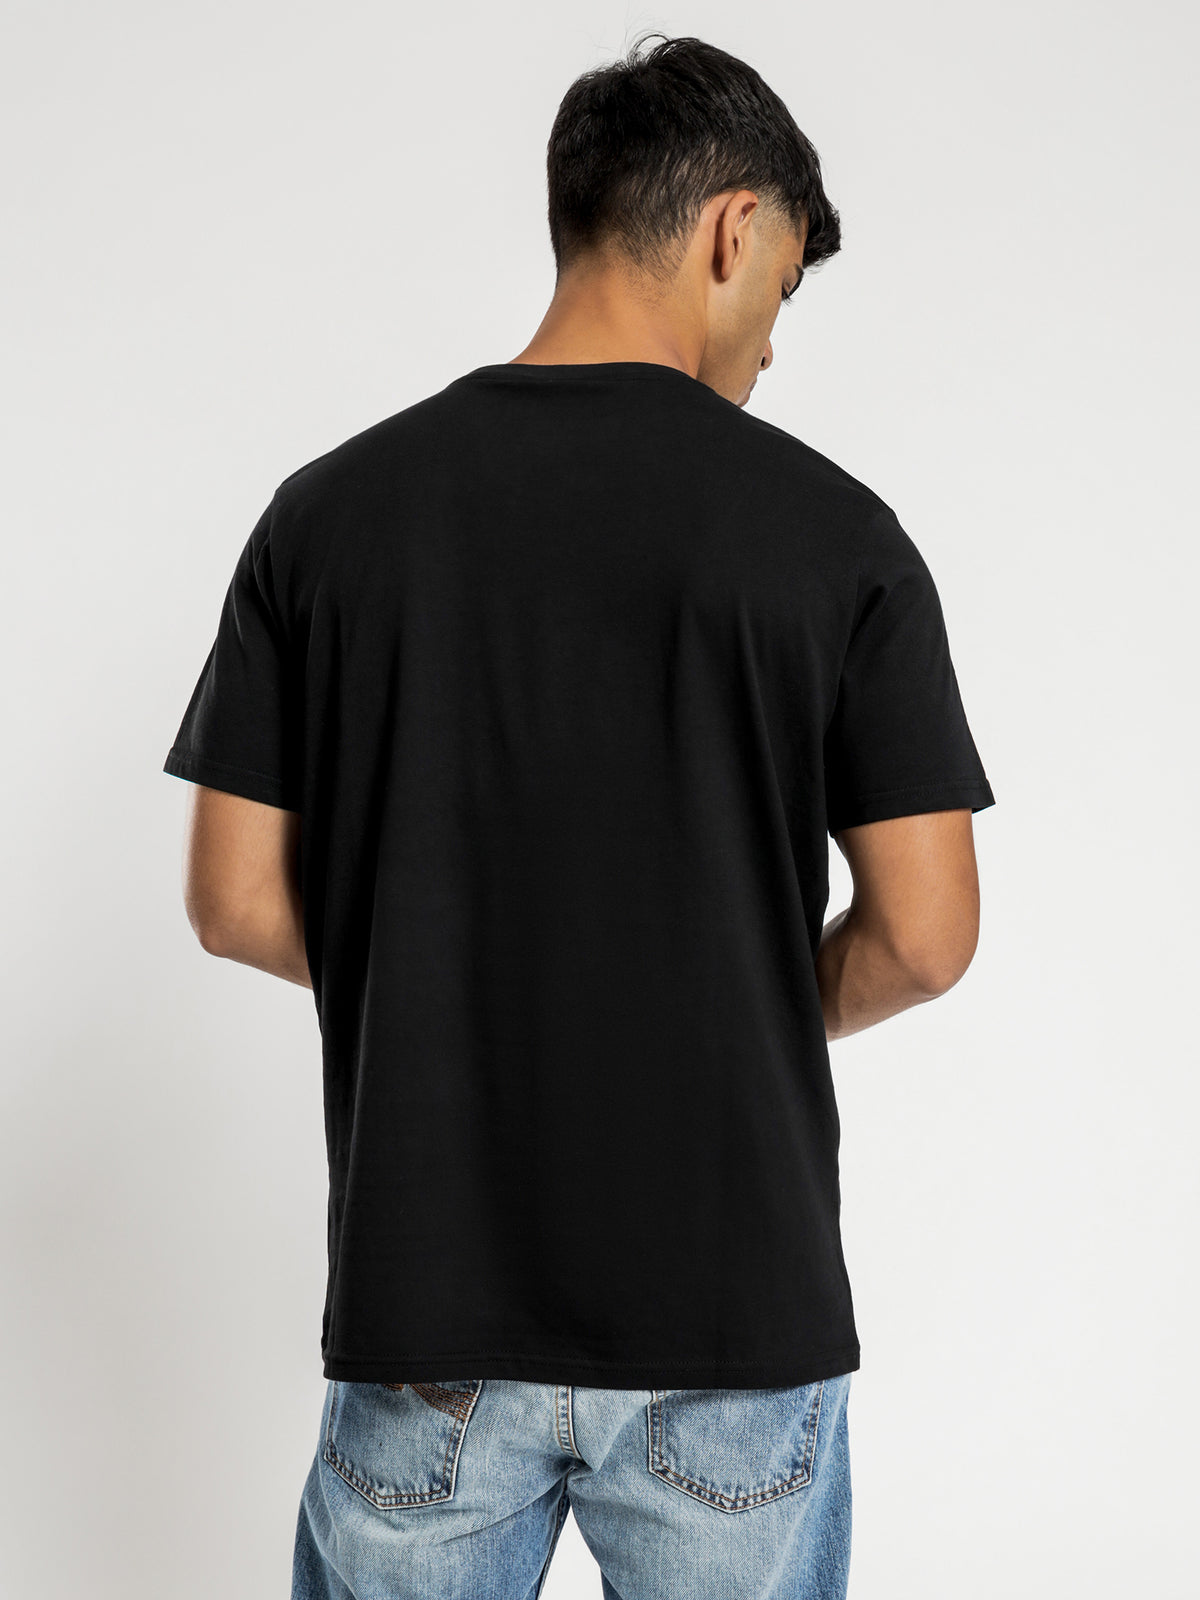 Authentic Dris T-Shirt in Black Relfective